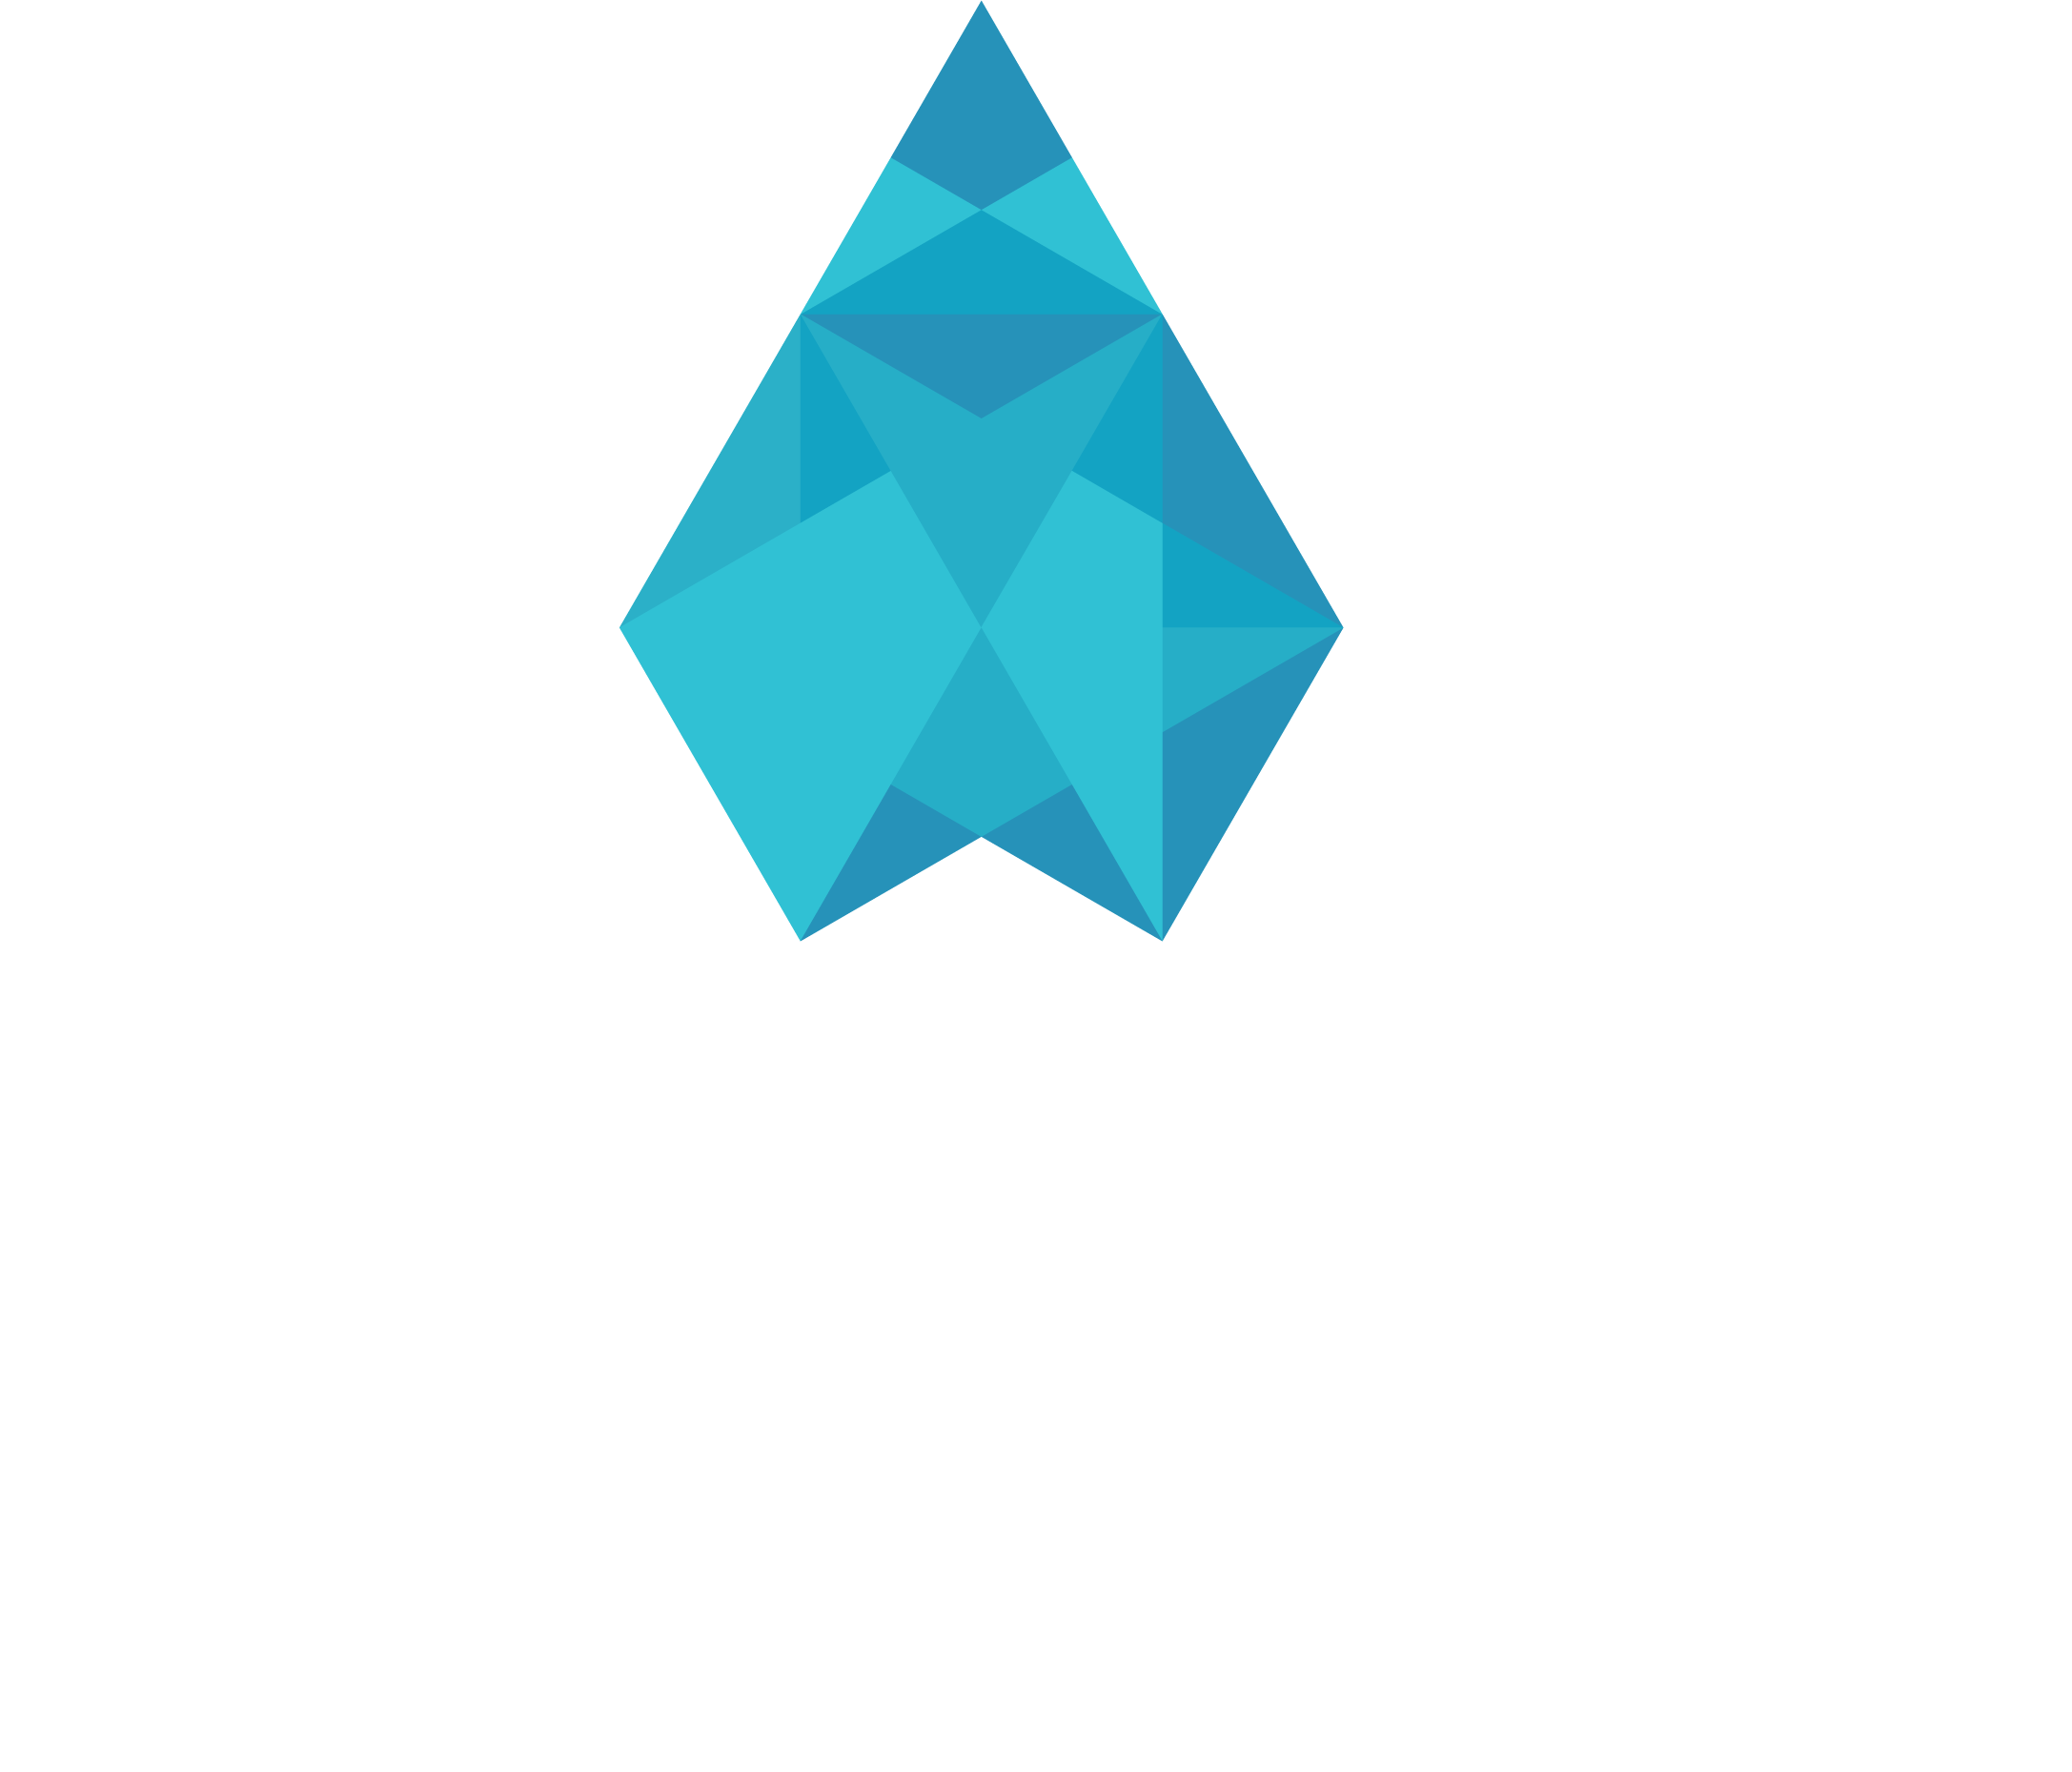 Kralanx